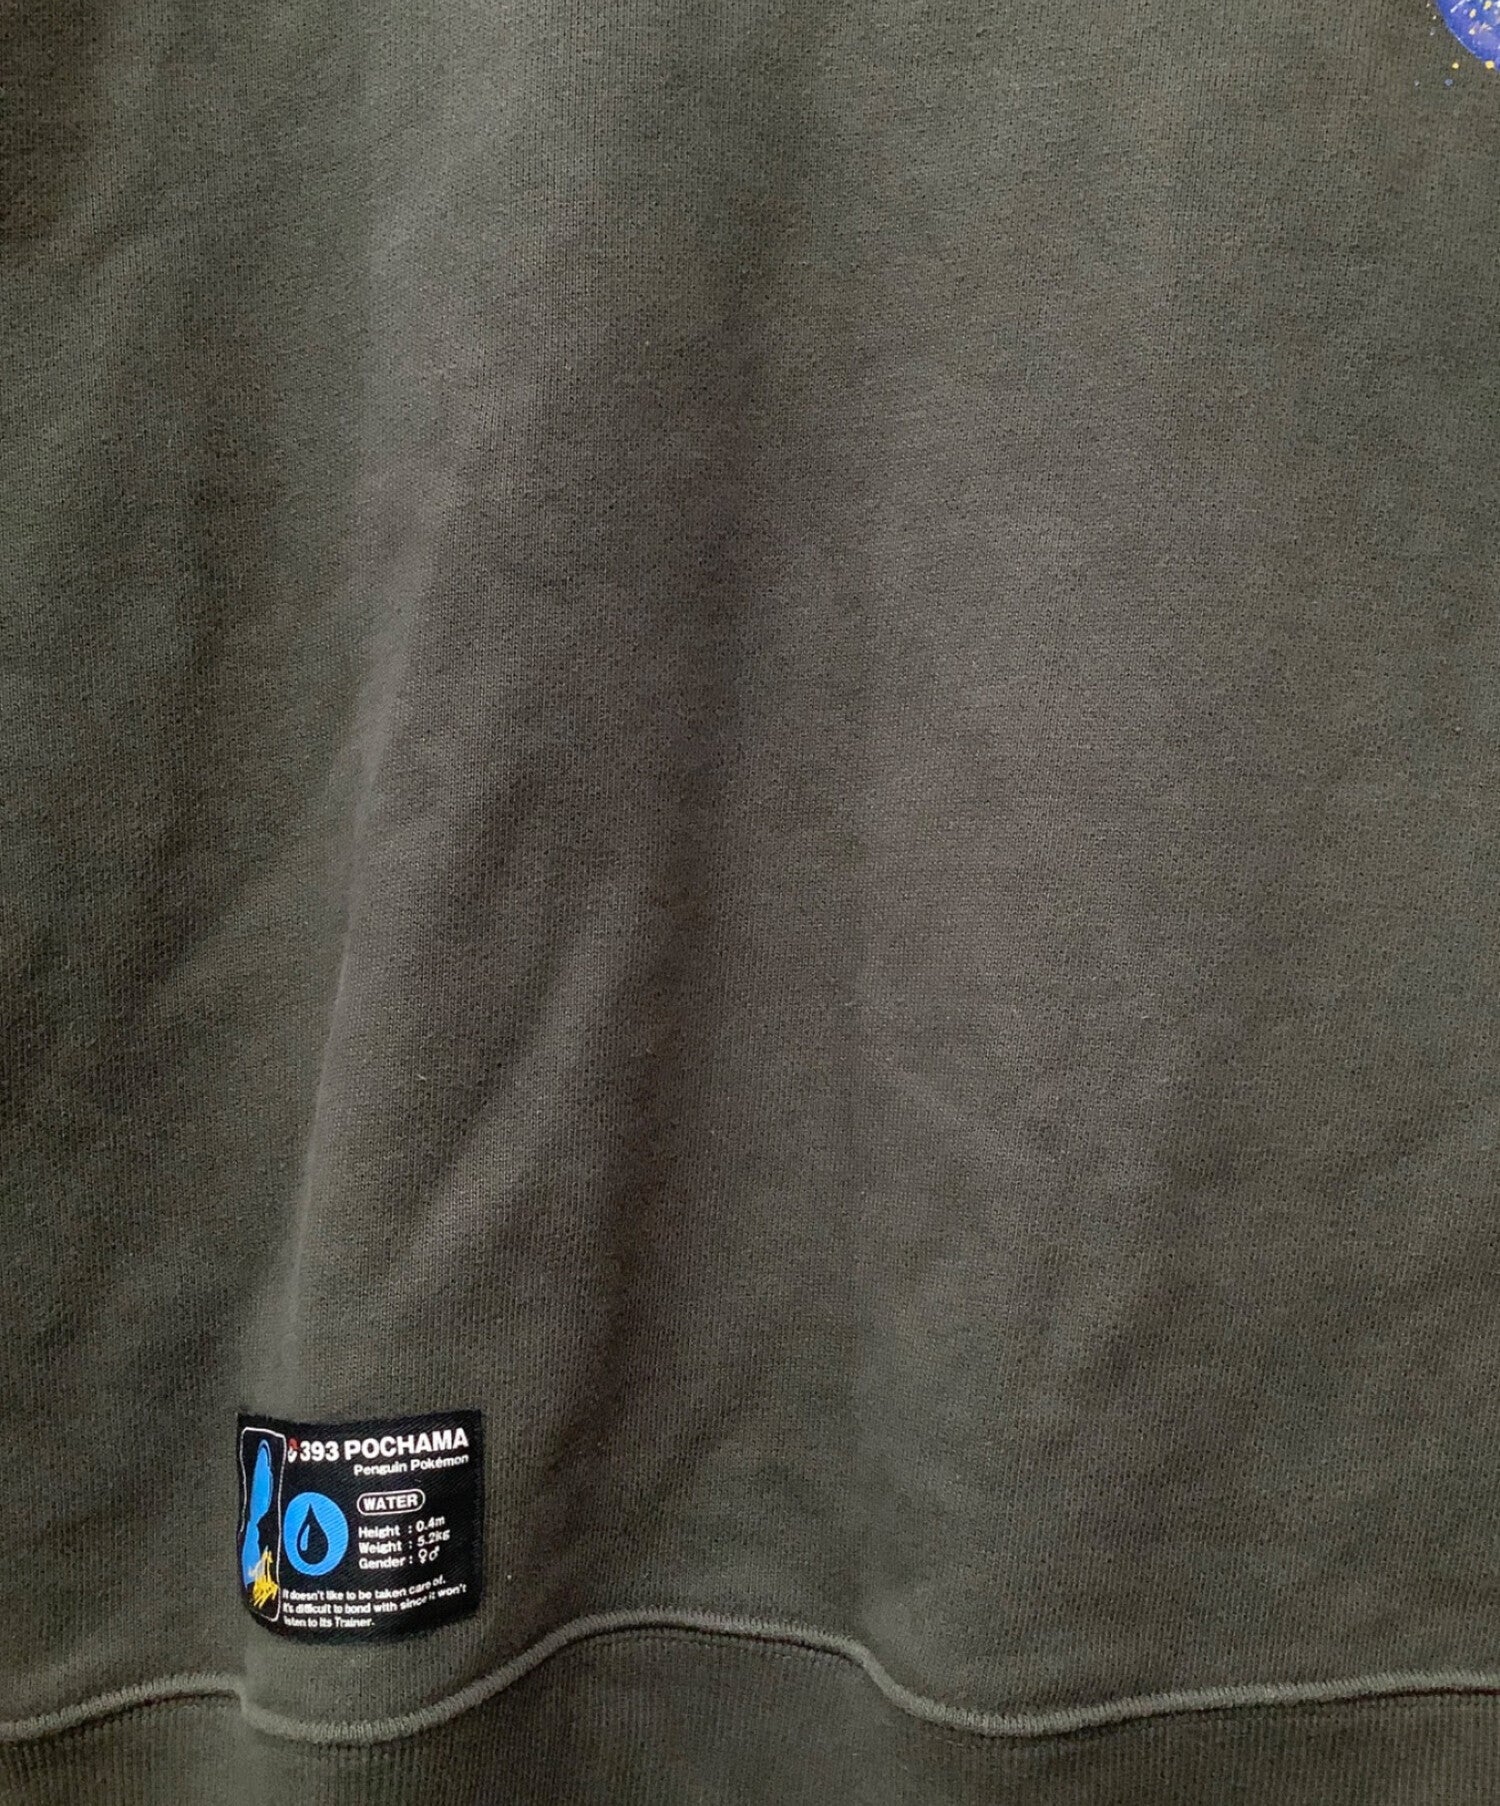 9090×POCHAMA sweatshirt | Archive Factory